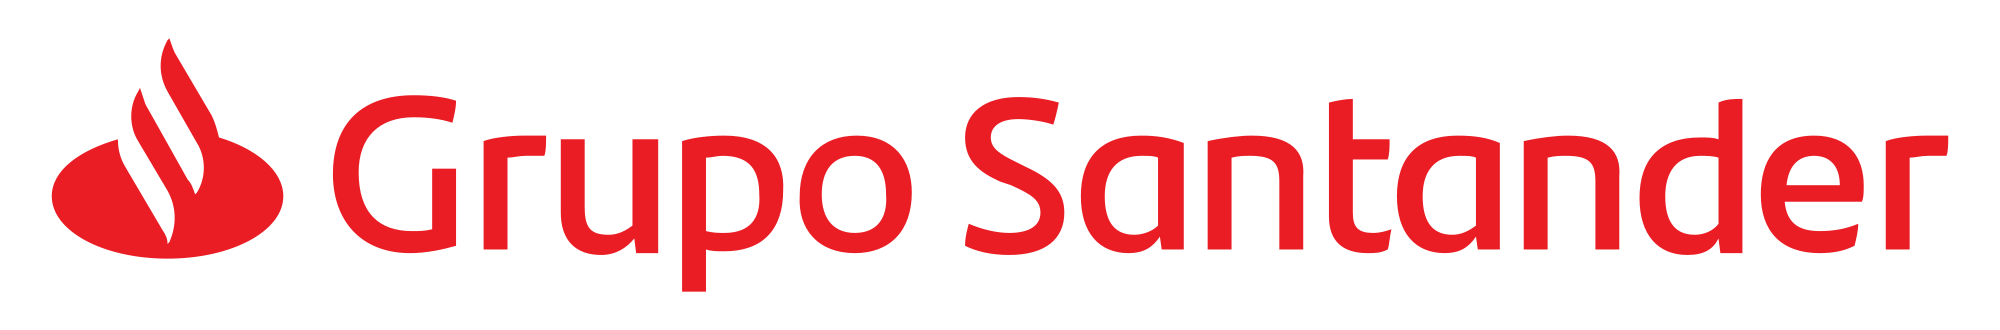 Santander Logo - Grupo Santander Logo.svg